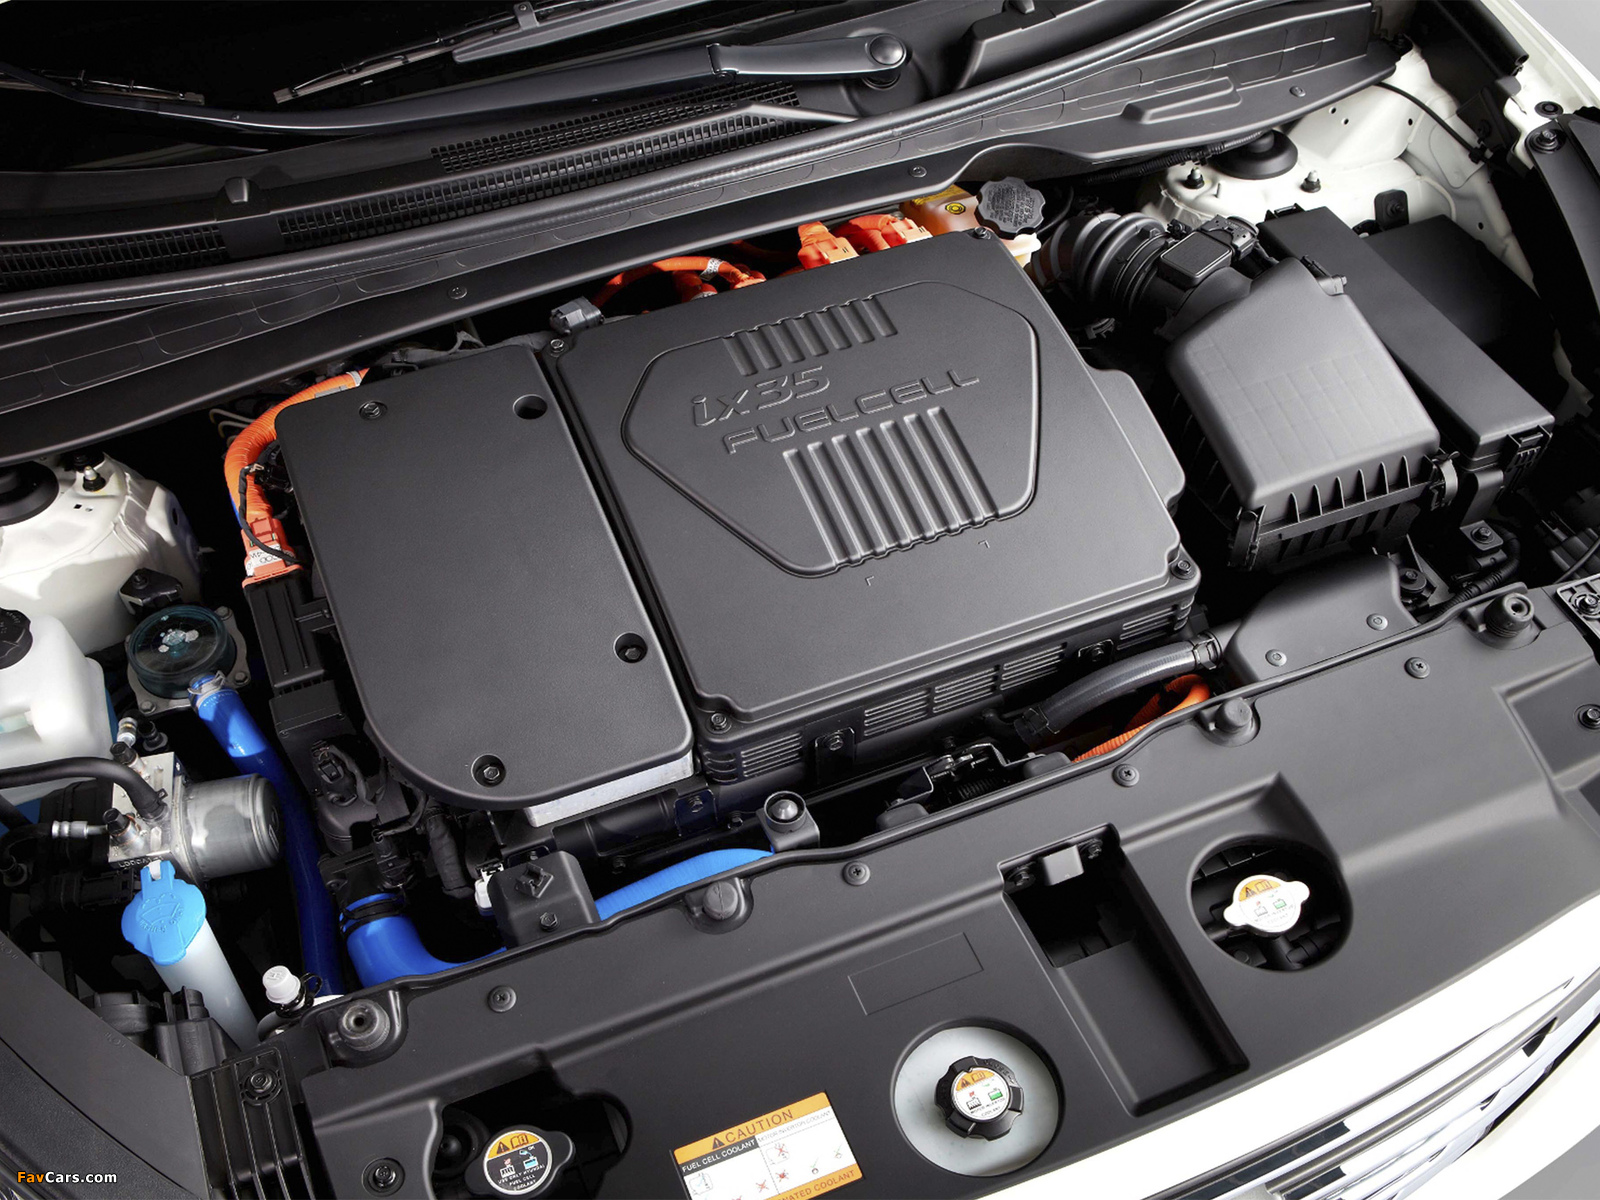 Hyundai ix35 Fuel Cell 2012 photos (1600 x 1200)